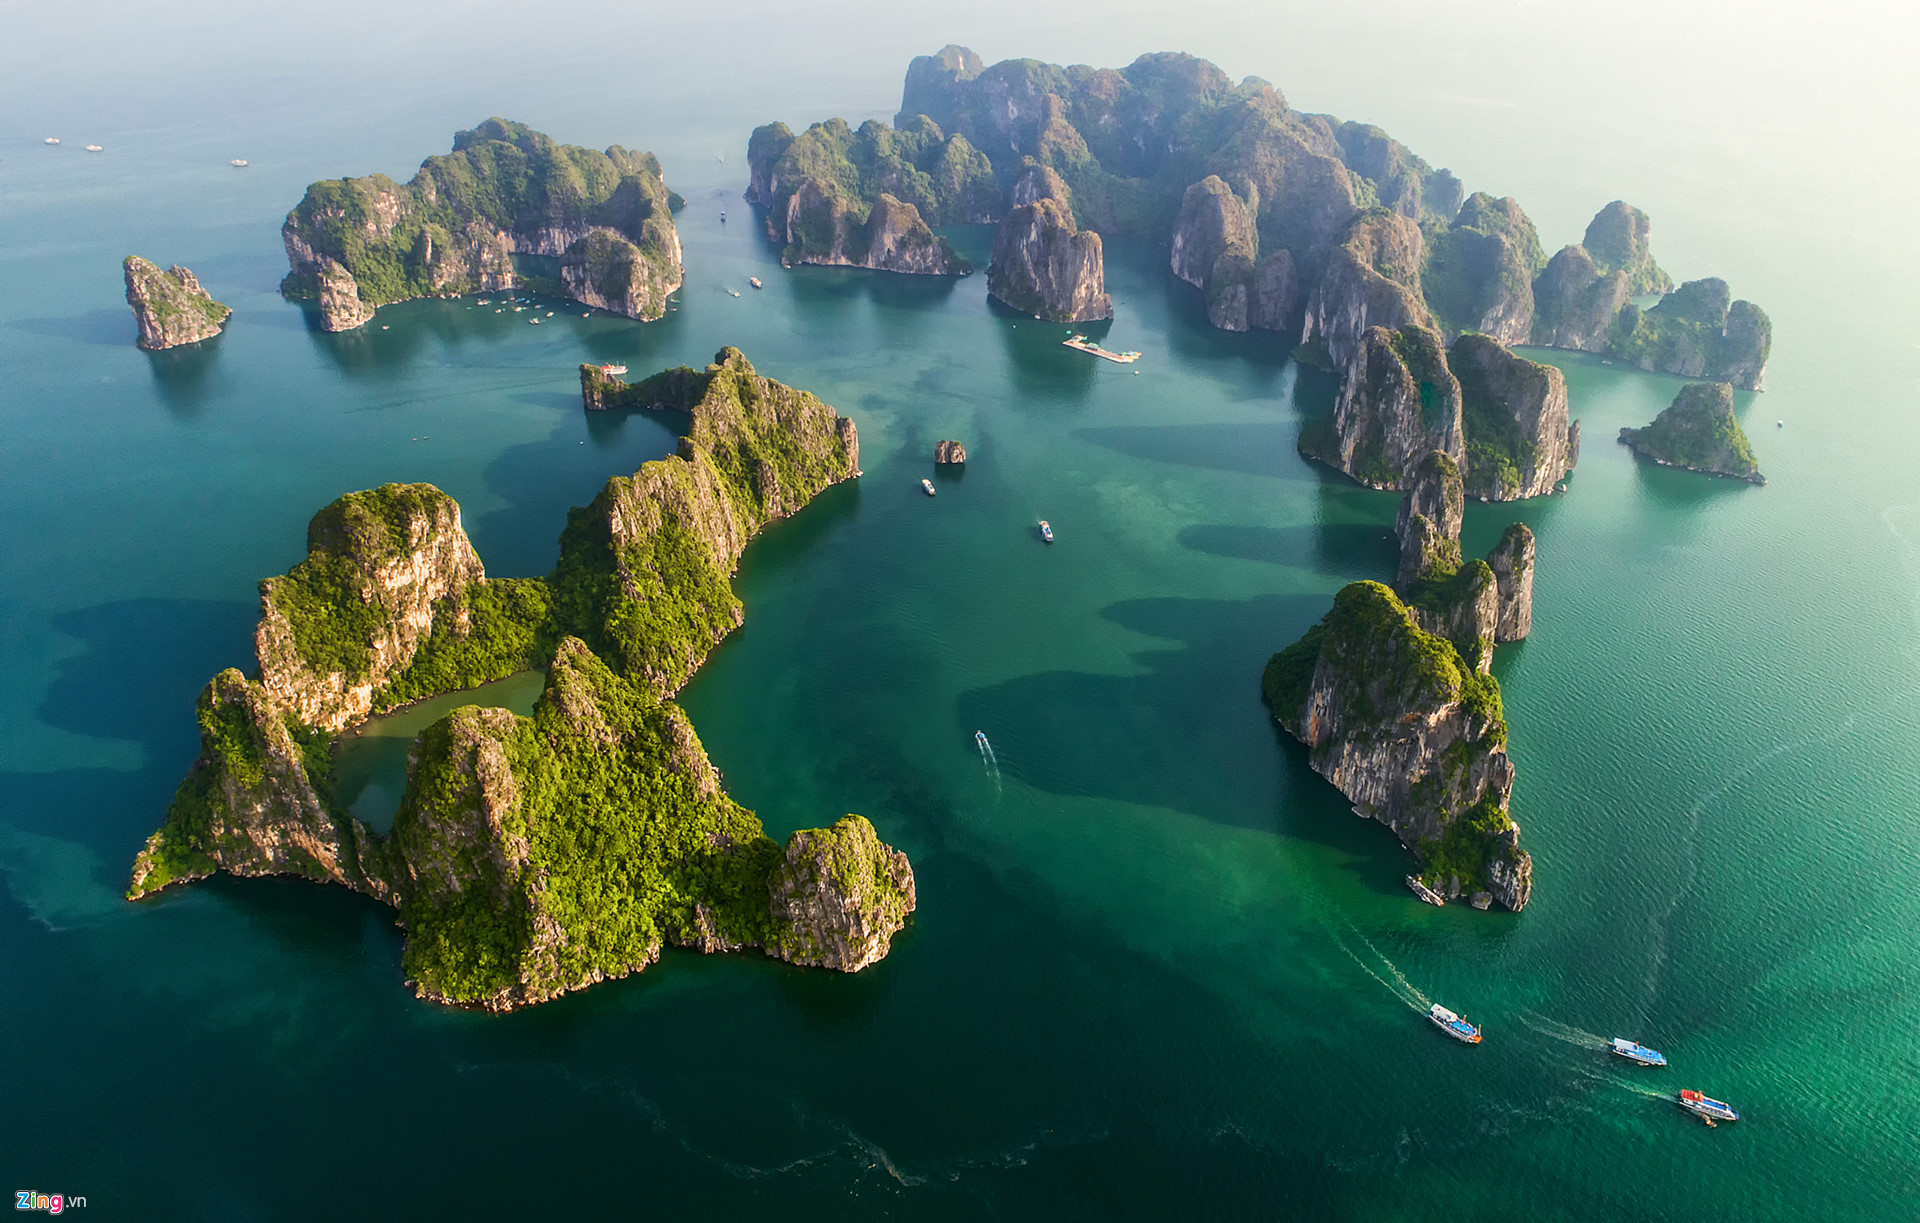 Vietnam Package Tours from Australia: The Best Vietnam Trip